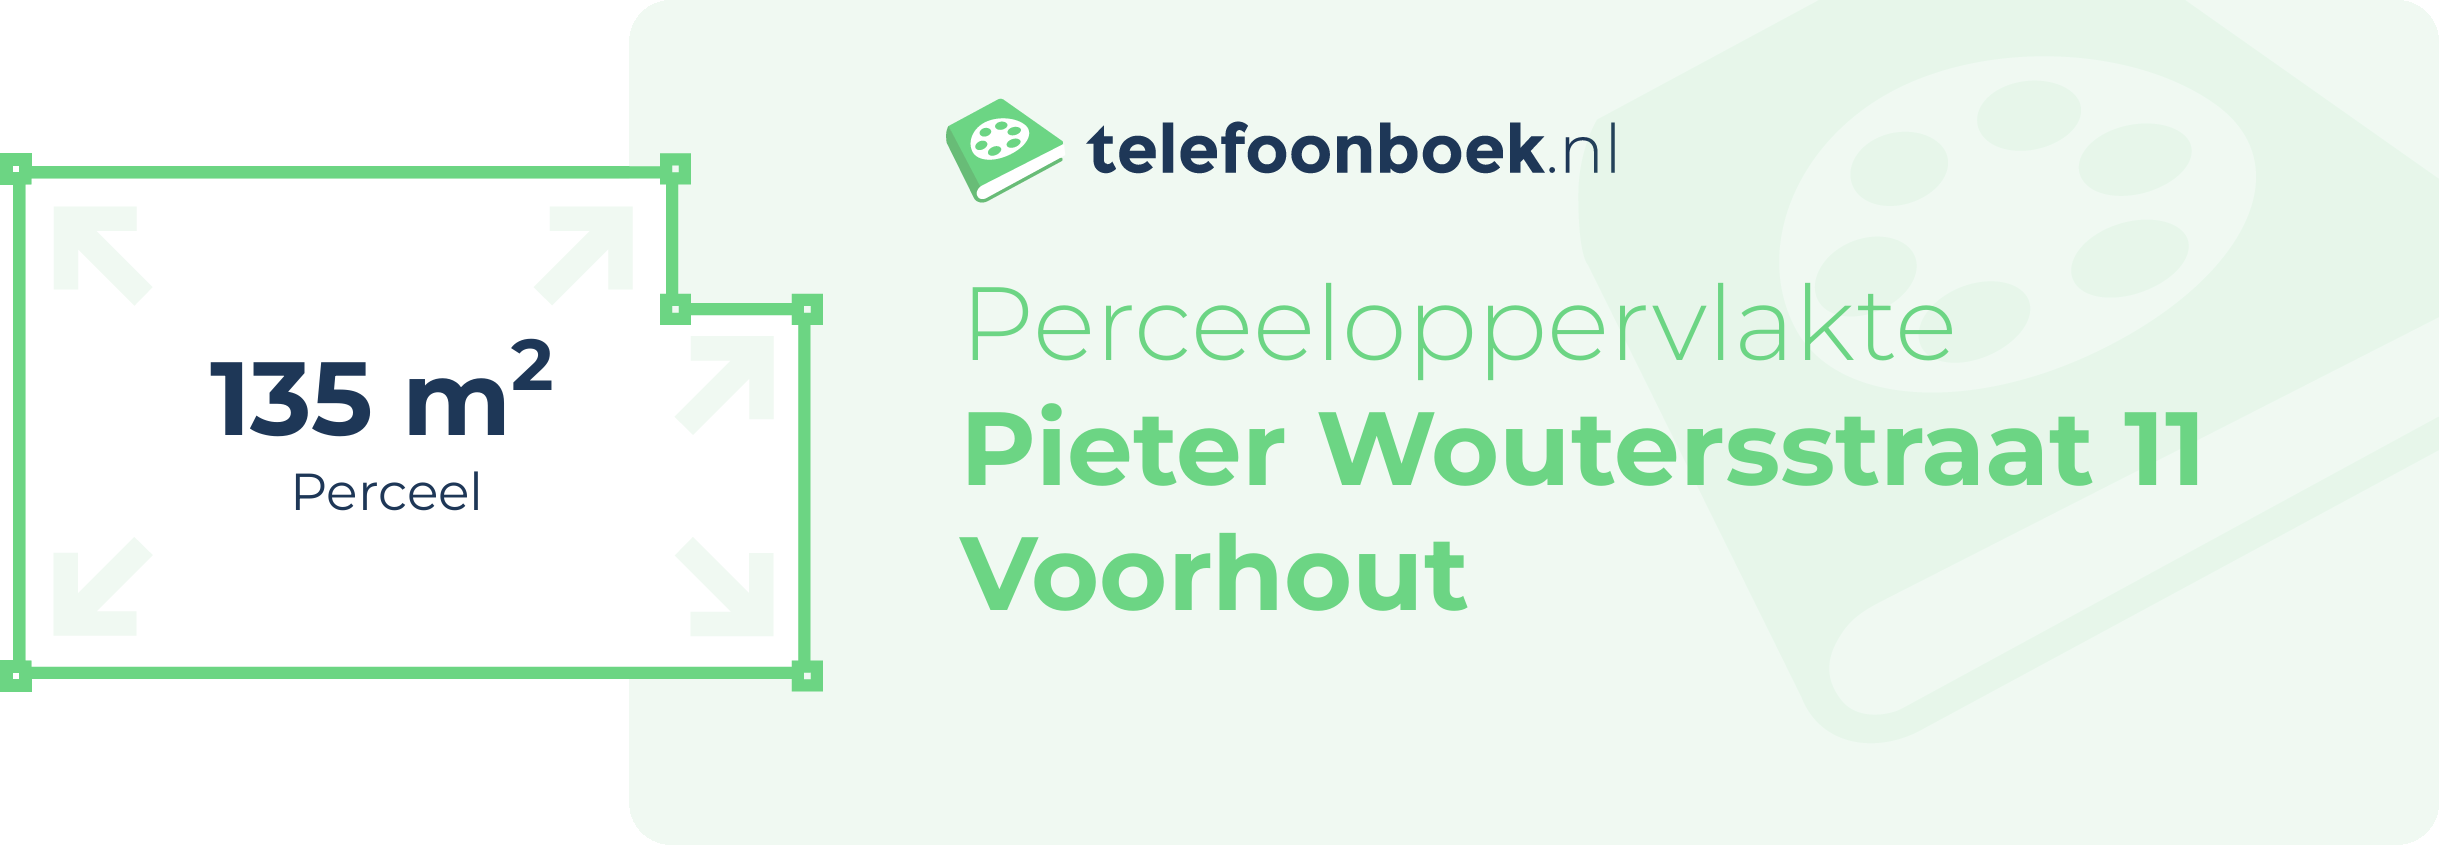 Perceeloppervlakte Pieter Woutersstraat 11 Voorhout